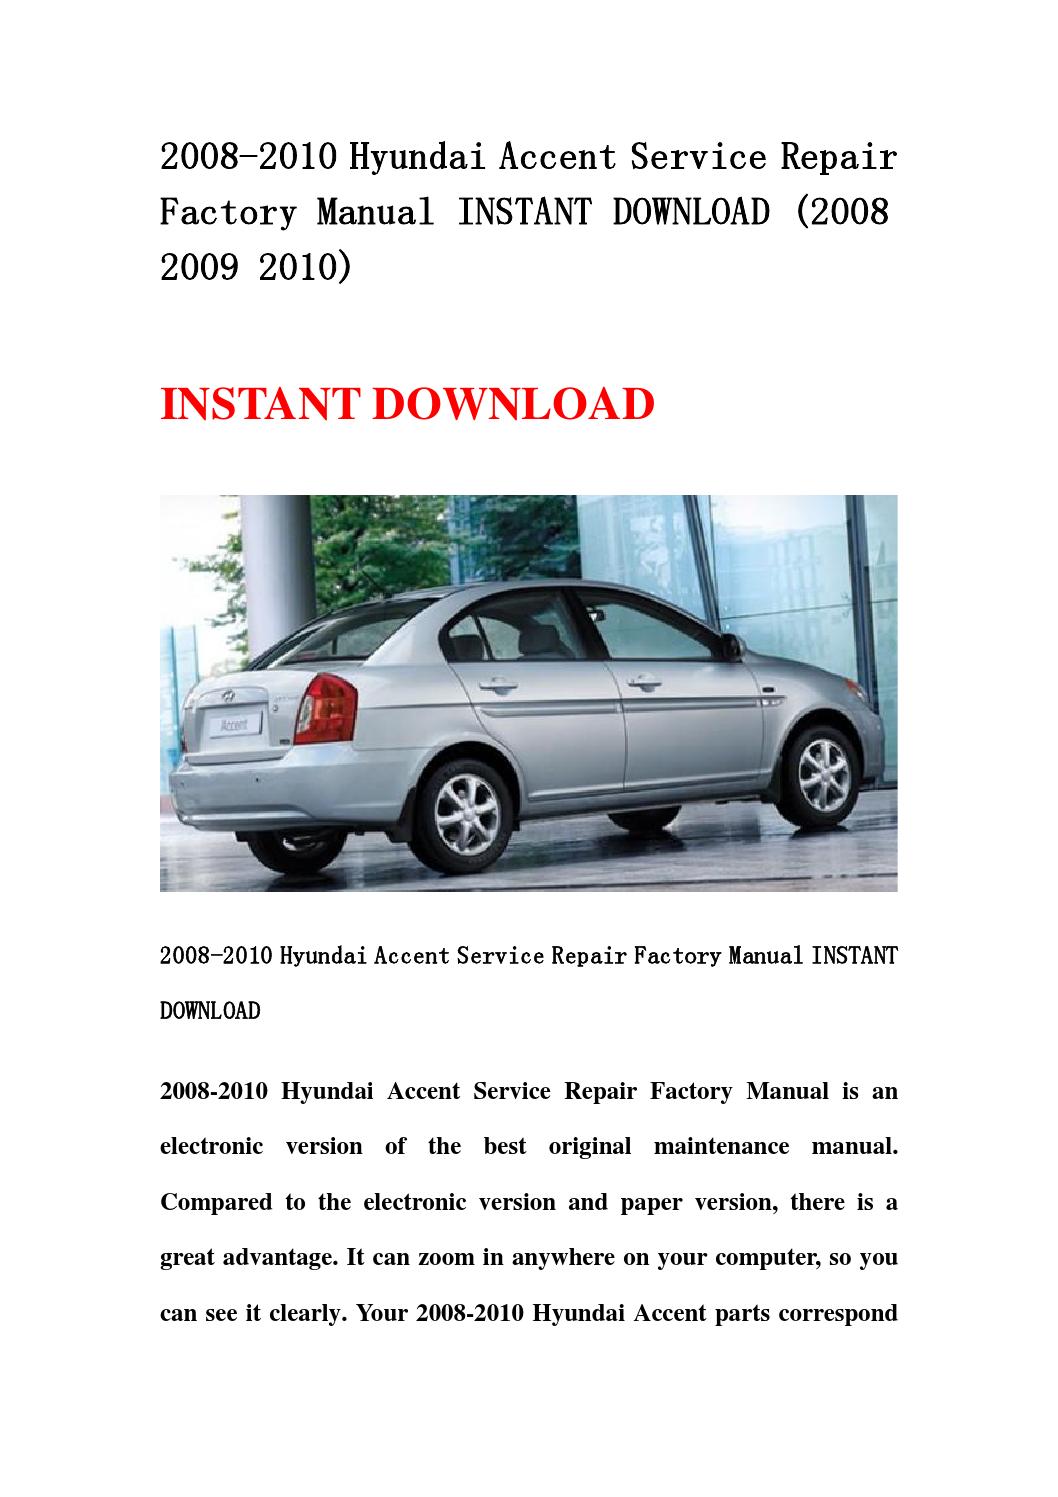 2008 hyundai accent owners manual download